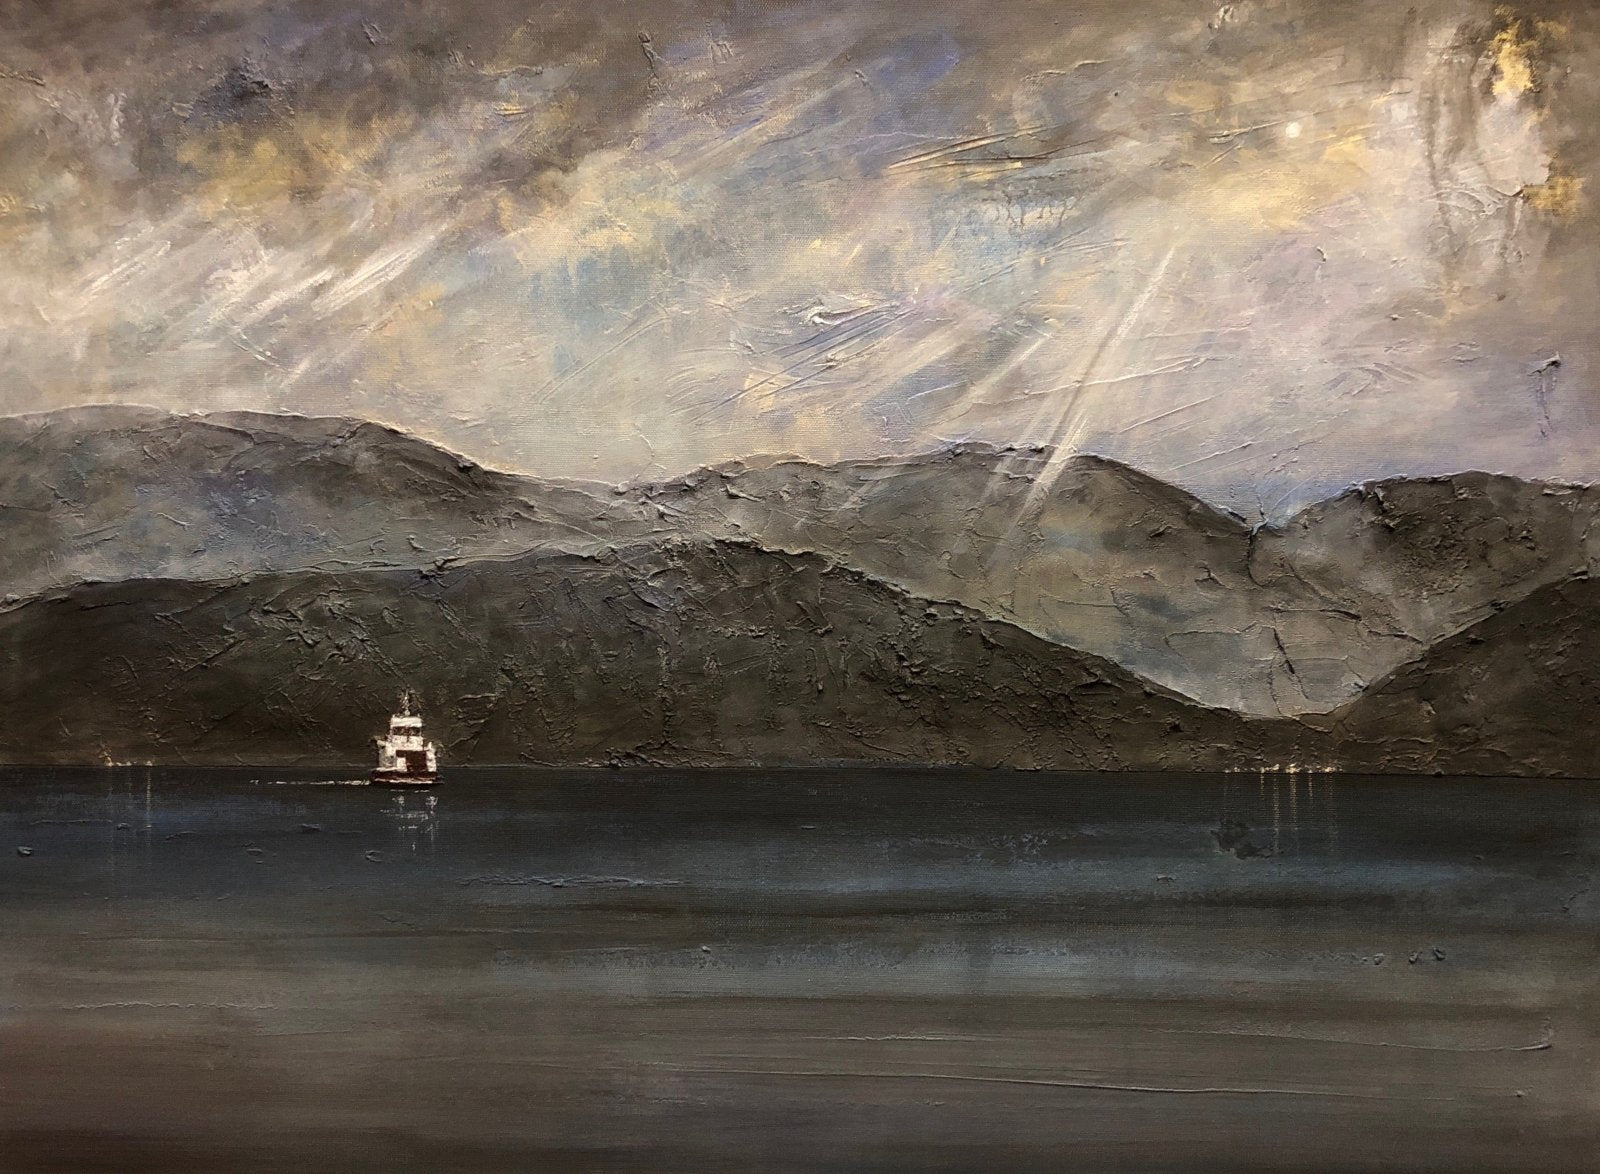 Lochranza Moonlit Ferry-Signed Art Prints By Scottish Artist Hunter-Arran Art Gallery-Paintings, Prints, Homeware, Art Gifts From Scotland By Scottish Artist Kevin Hunter